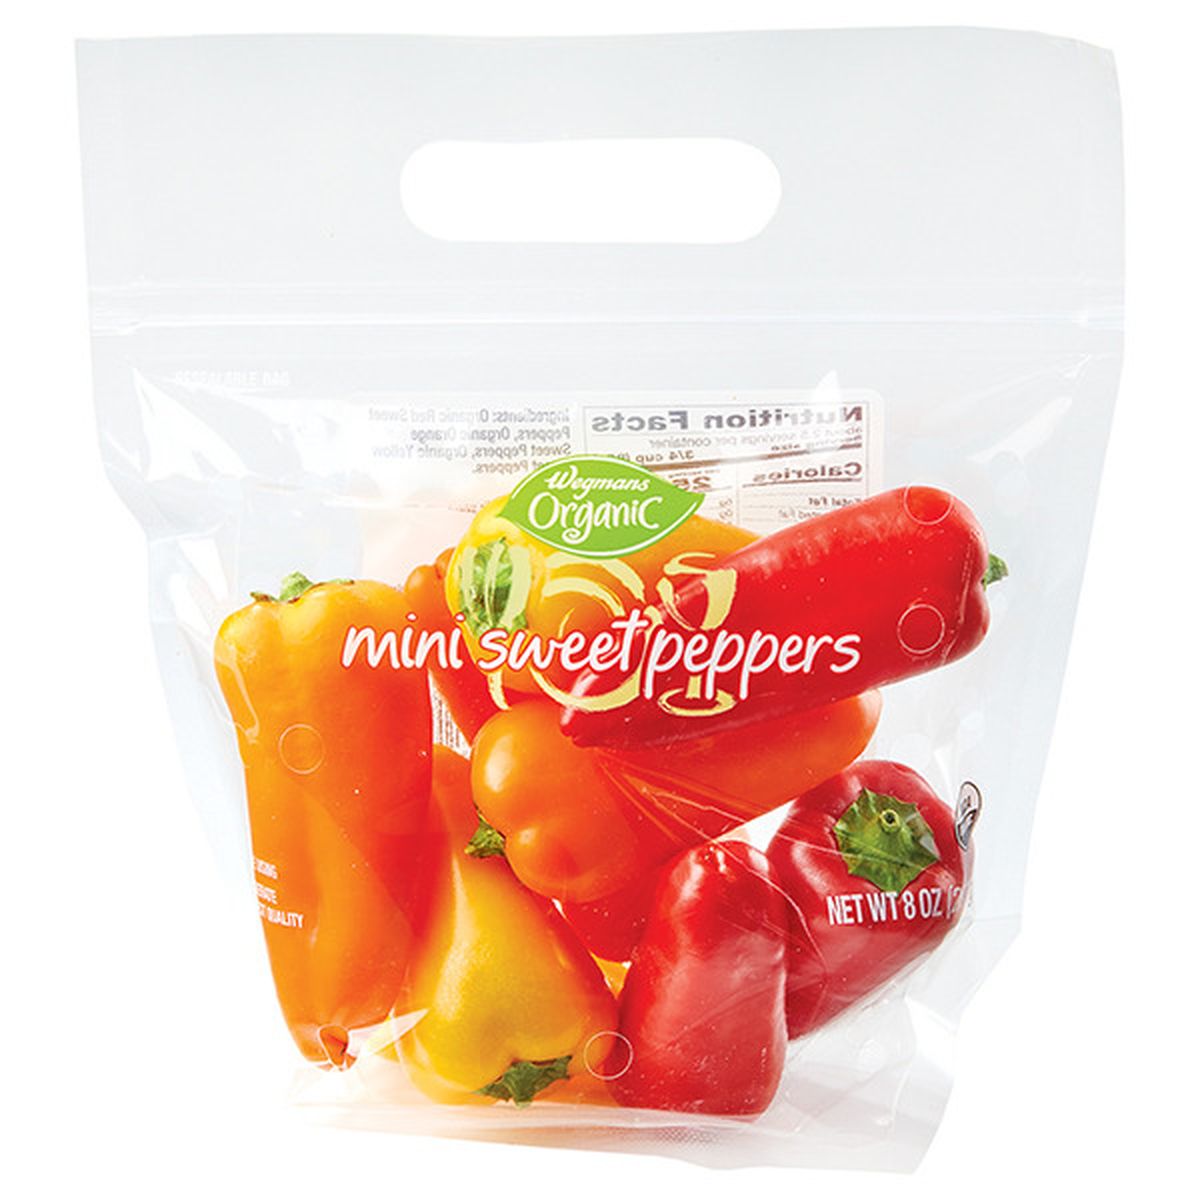 Calories in Wegmans Organic Mini Sweet Peppers